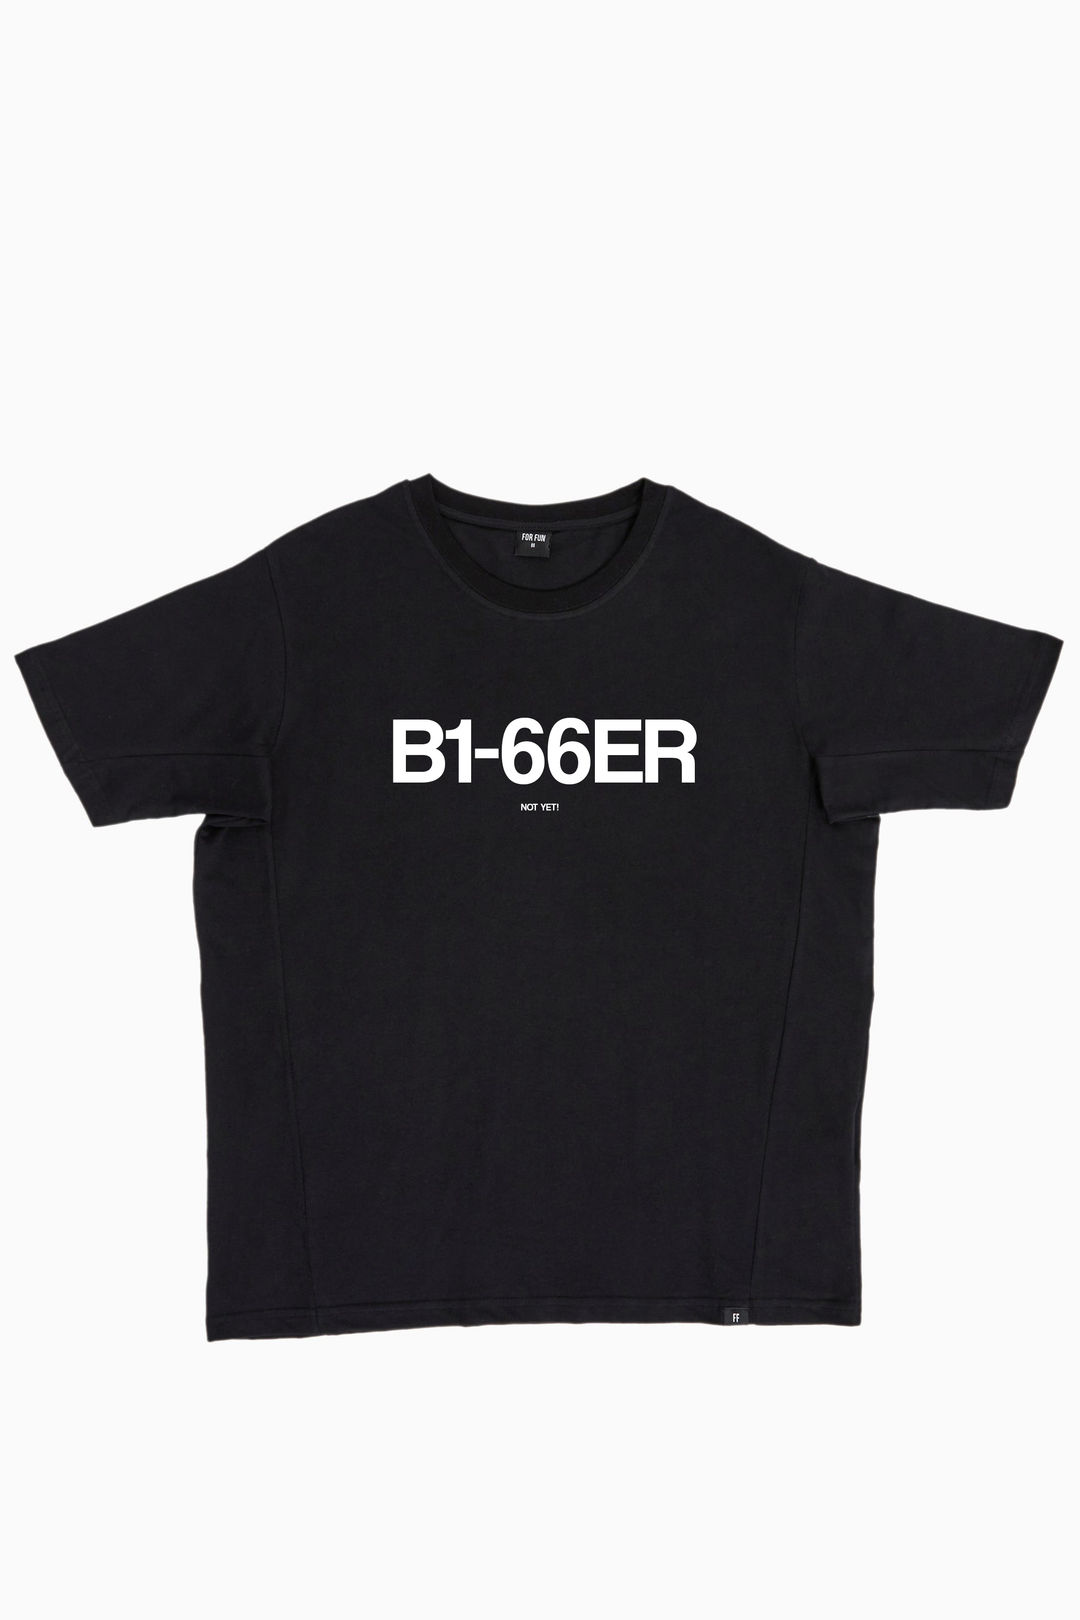 B1-66ER / Oversize T-shirt